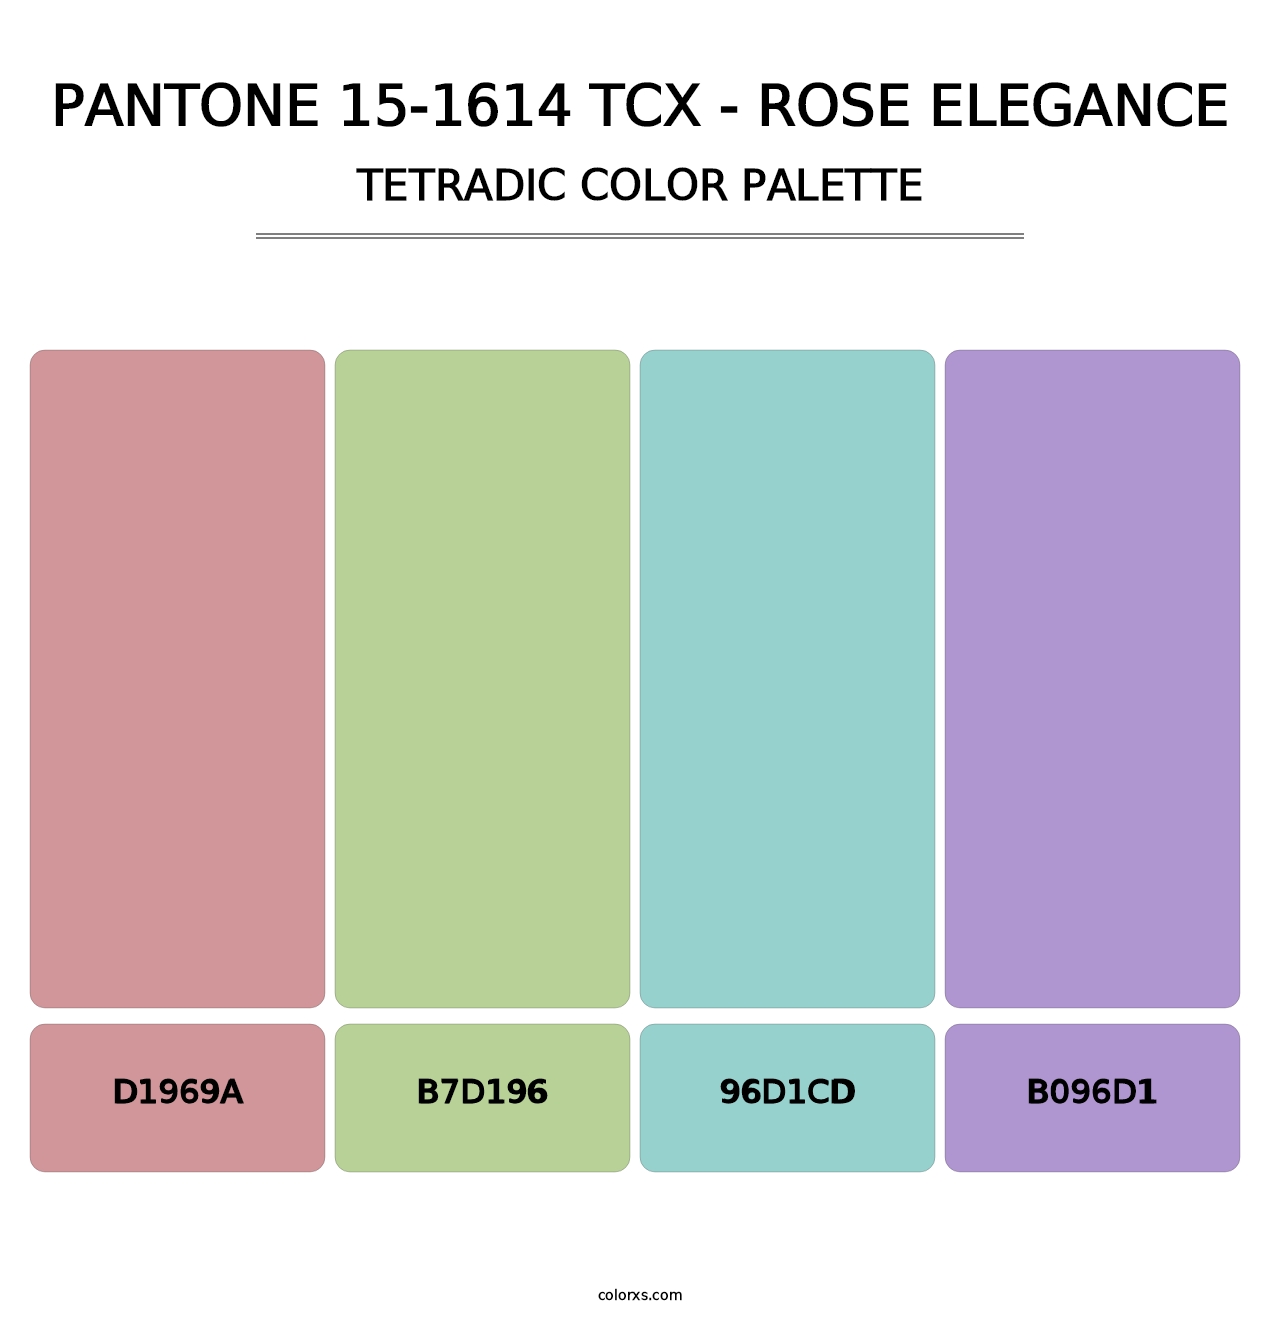 PANTONE 15-1614 TCX - Rose Elegance - Tetradic Color Palette